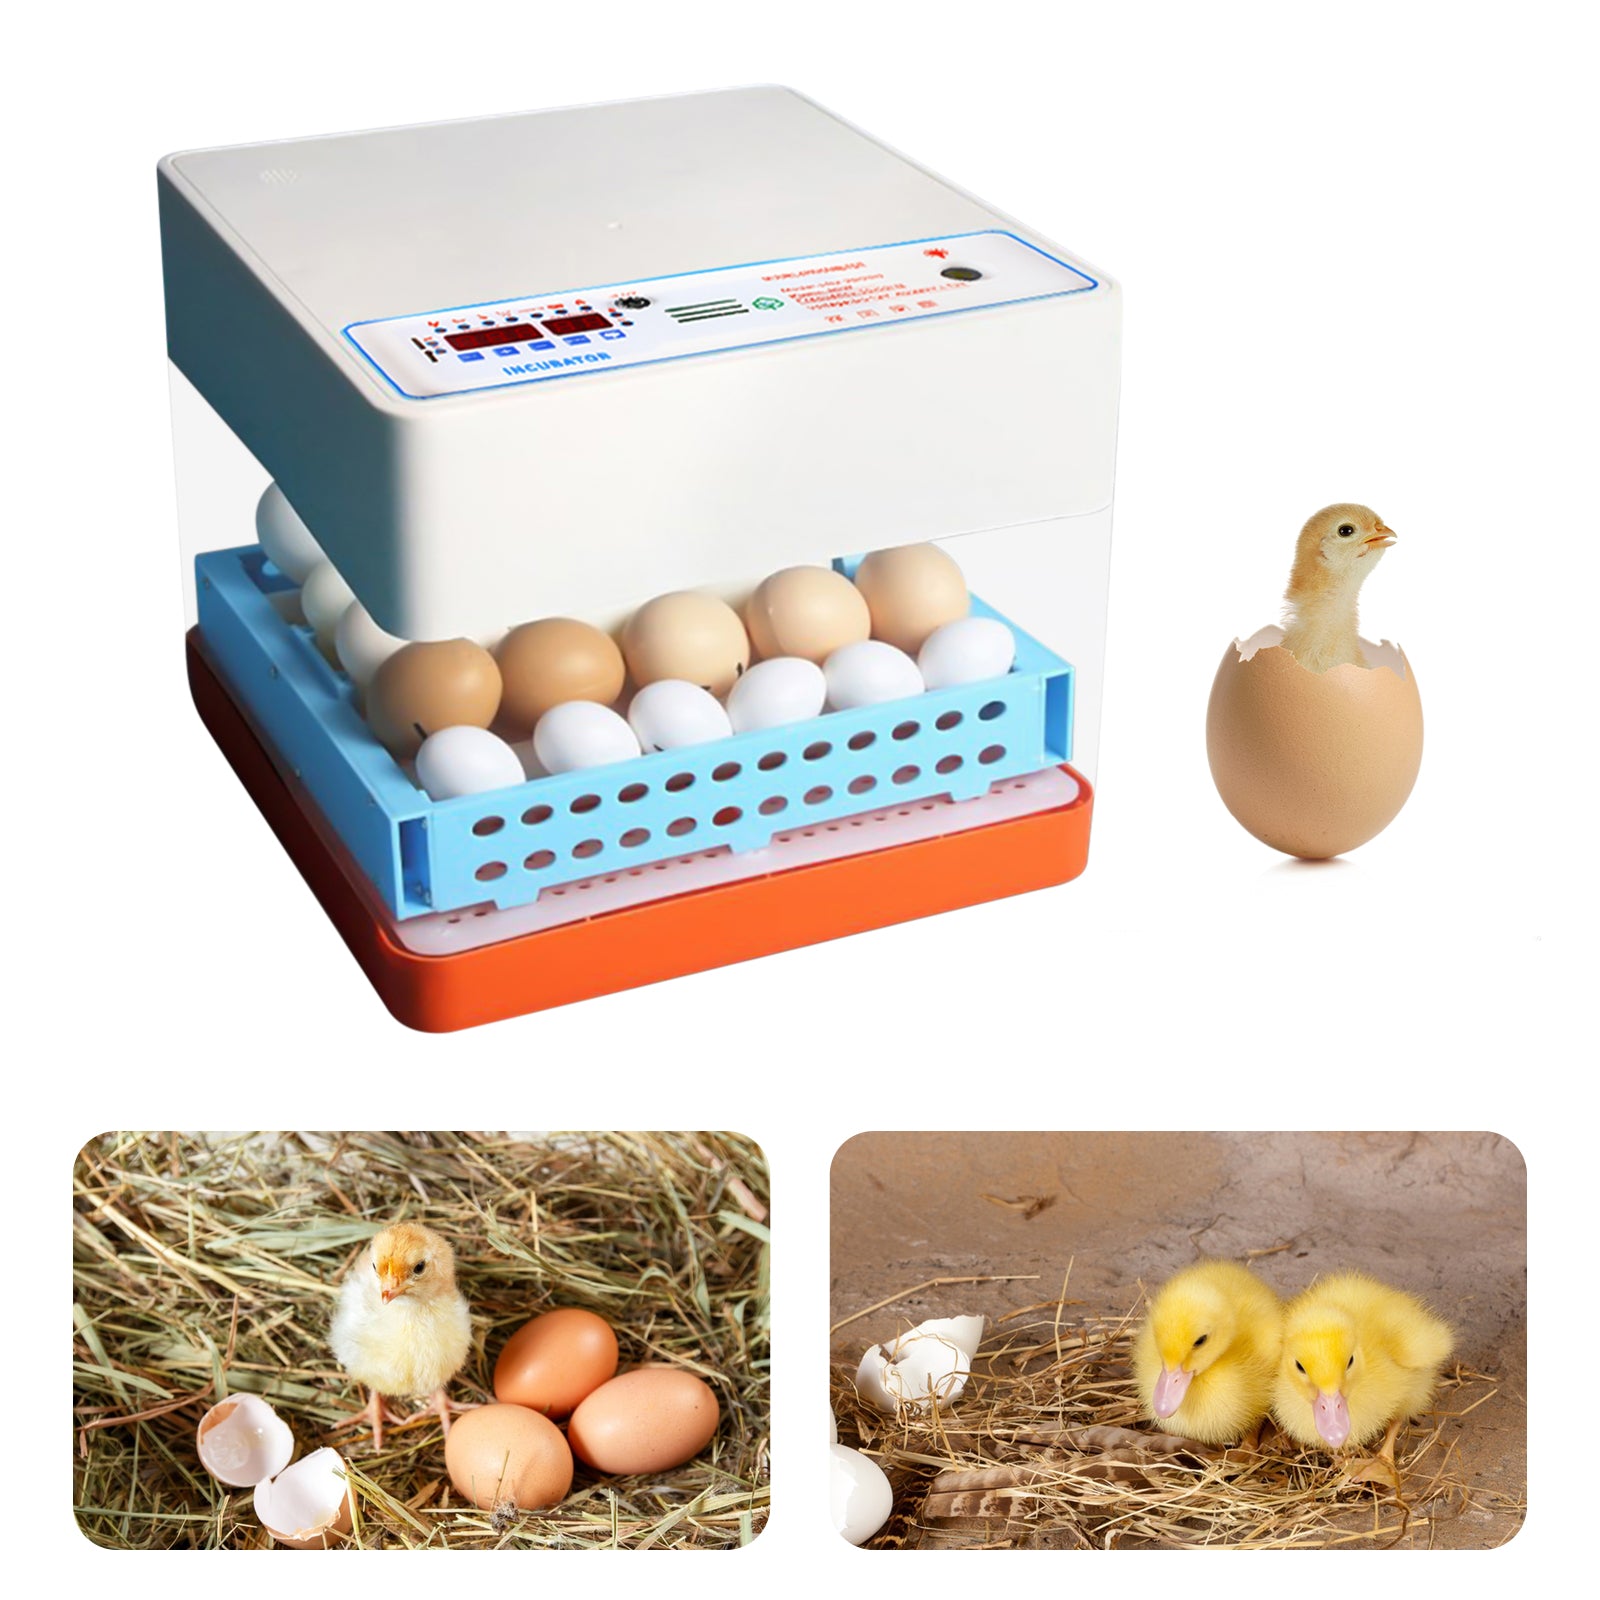 CNCEST Incubatrice 24 uova Rotazione automatica Incubatrice completamente automatica per pollo, anatre, pollame.